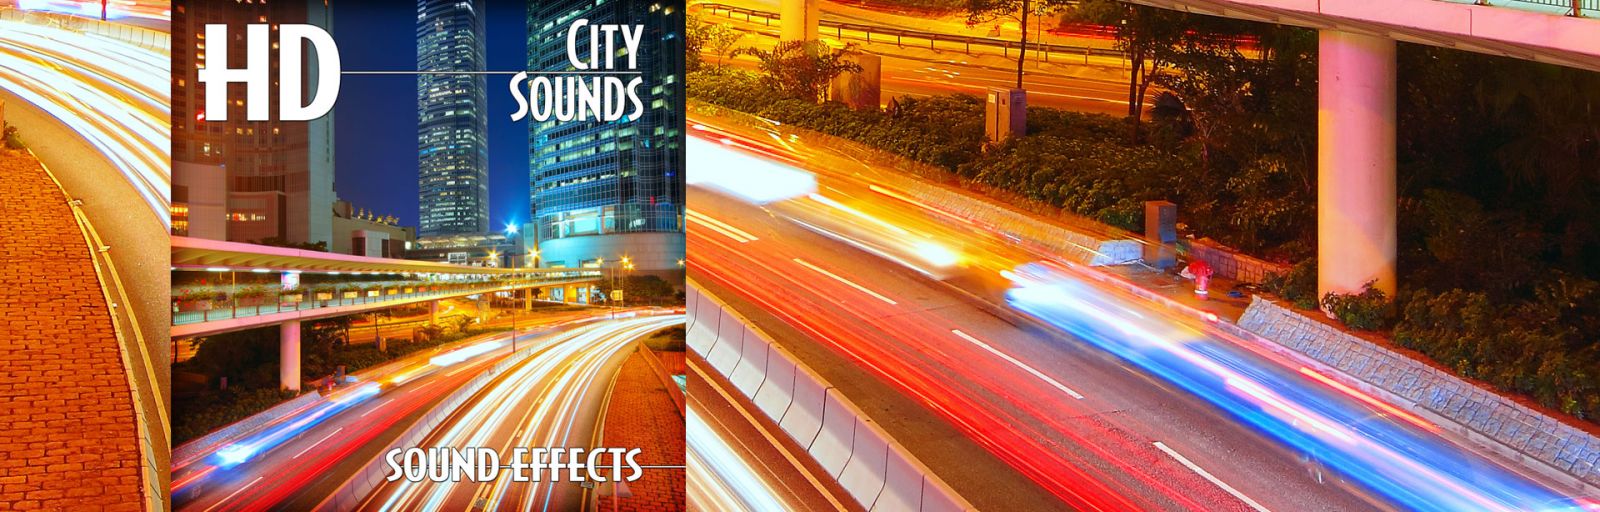 City Sounds - Sound Effects